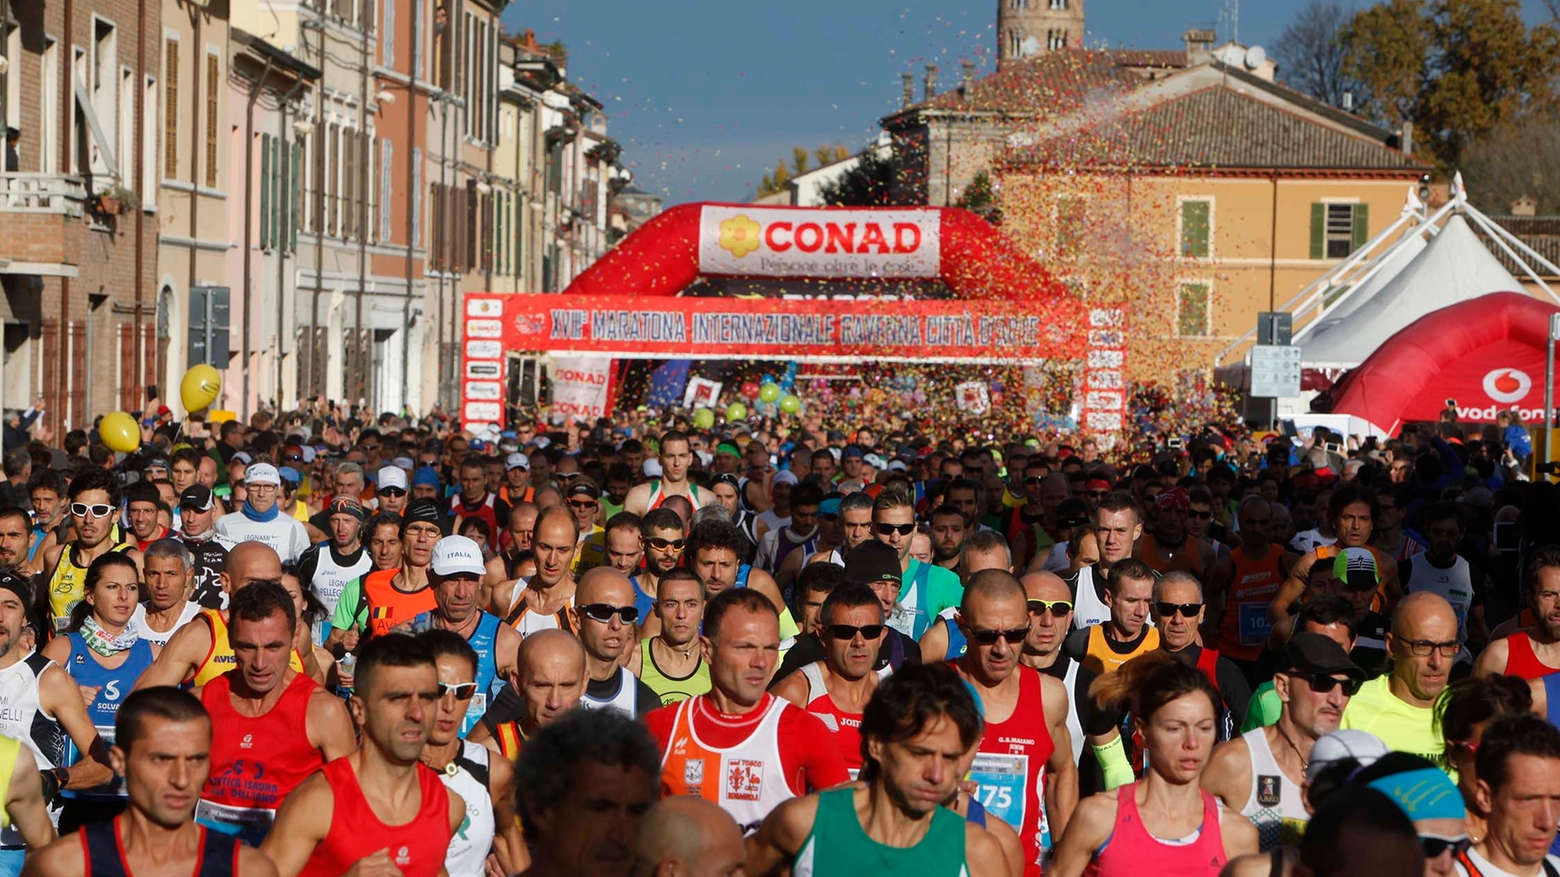 La XVIII Maratona internazionale (Corelli)